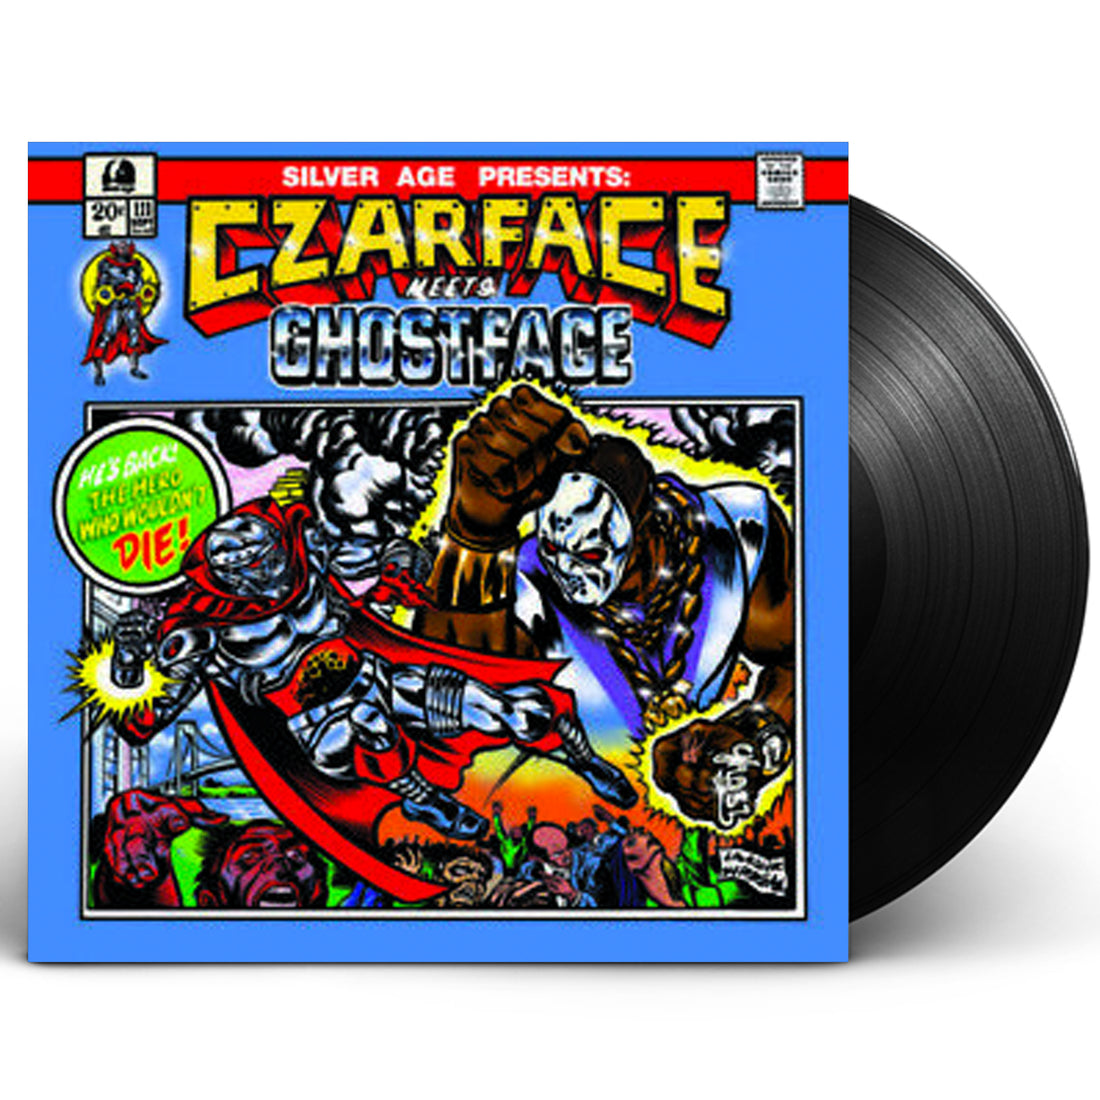 Czarface & Ghostface Killah. "Czarface Meets Ghostface" LP Vinyl